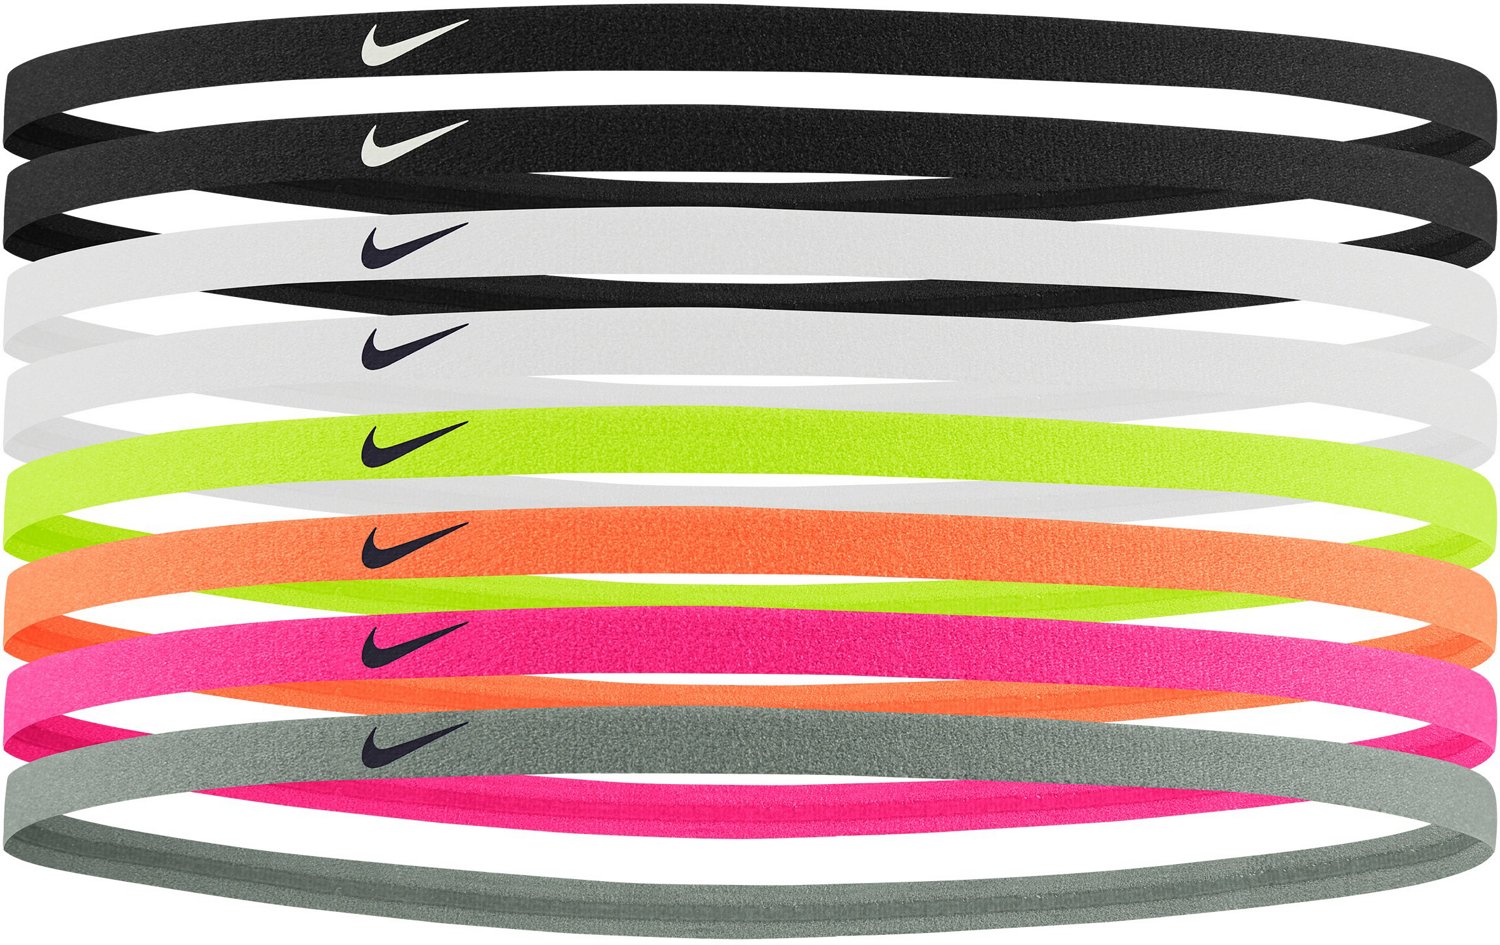 Резинка найк. Nike skinny Hairbands (8 Pack). Headbands Nike тонкая. Nike Swoosh Sport Headbands 6pk. Nike Hairbands.